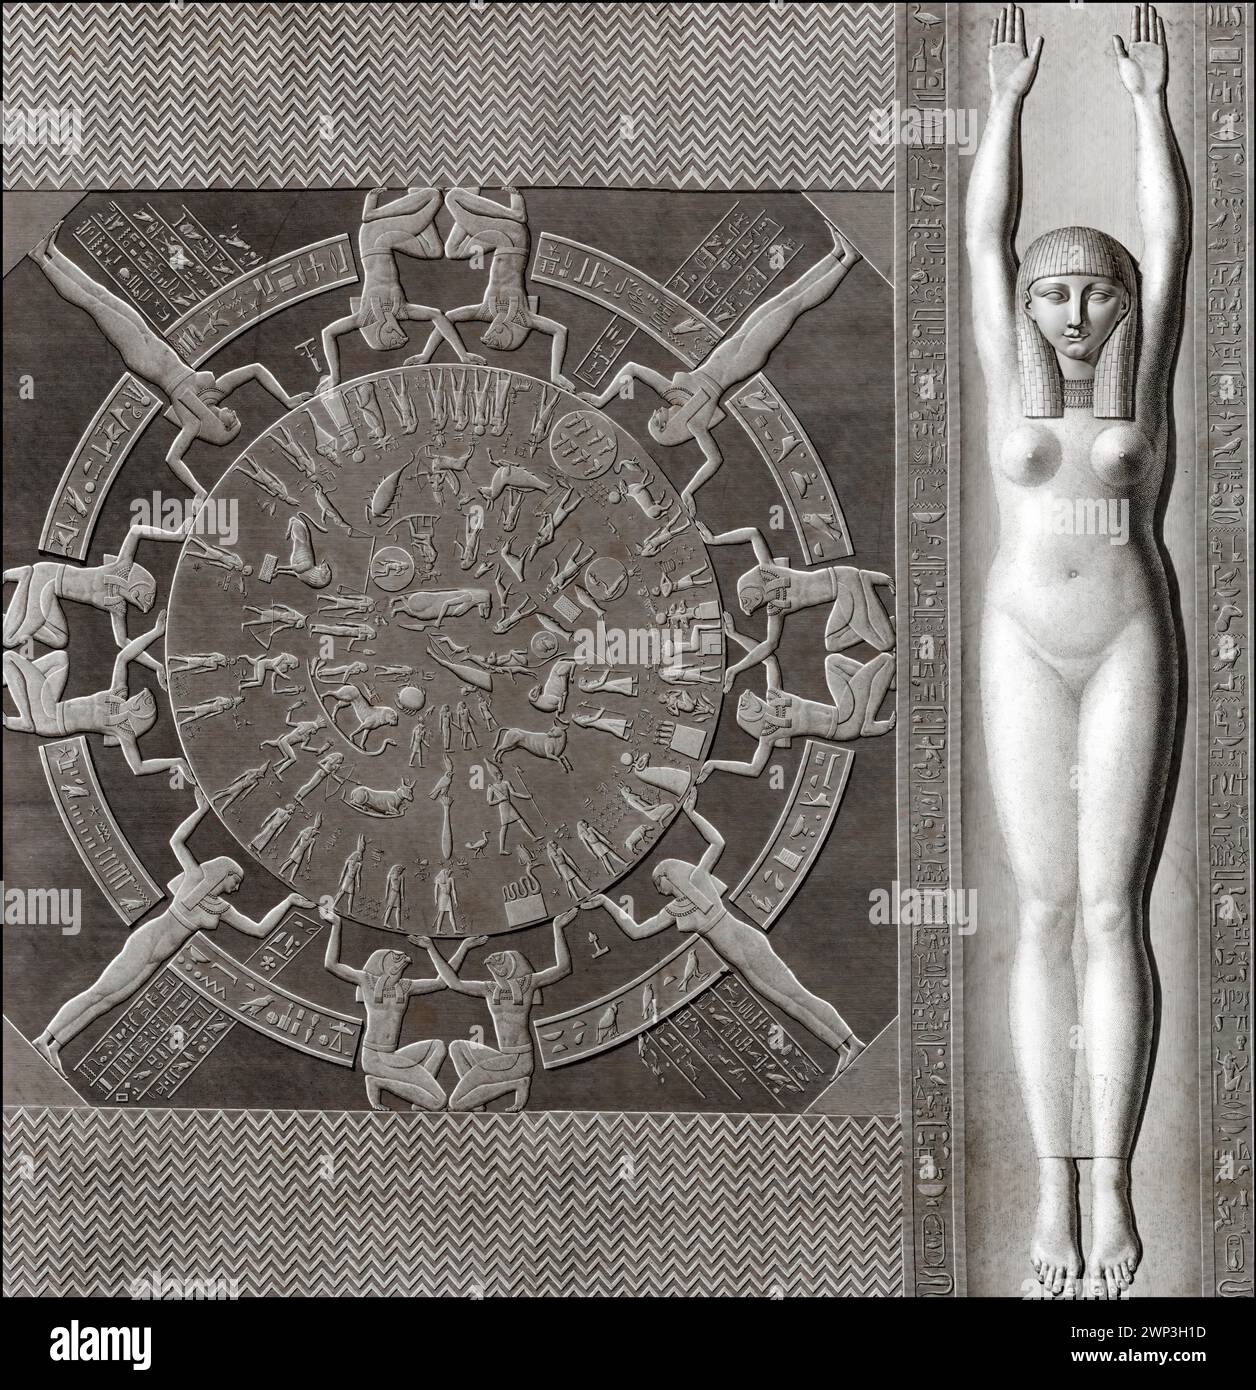 Zodiaque de Dendera, ancien complexe du temple de Dendera, Dendera, Égypte Banque D'Images